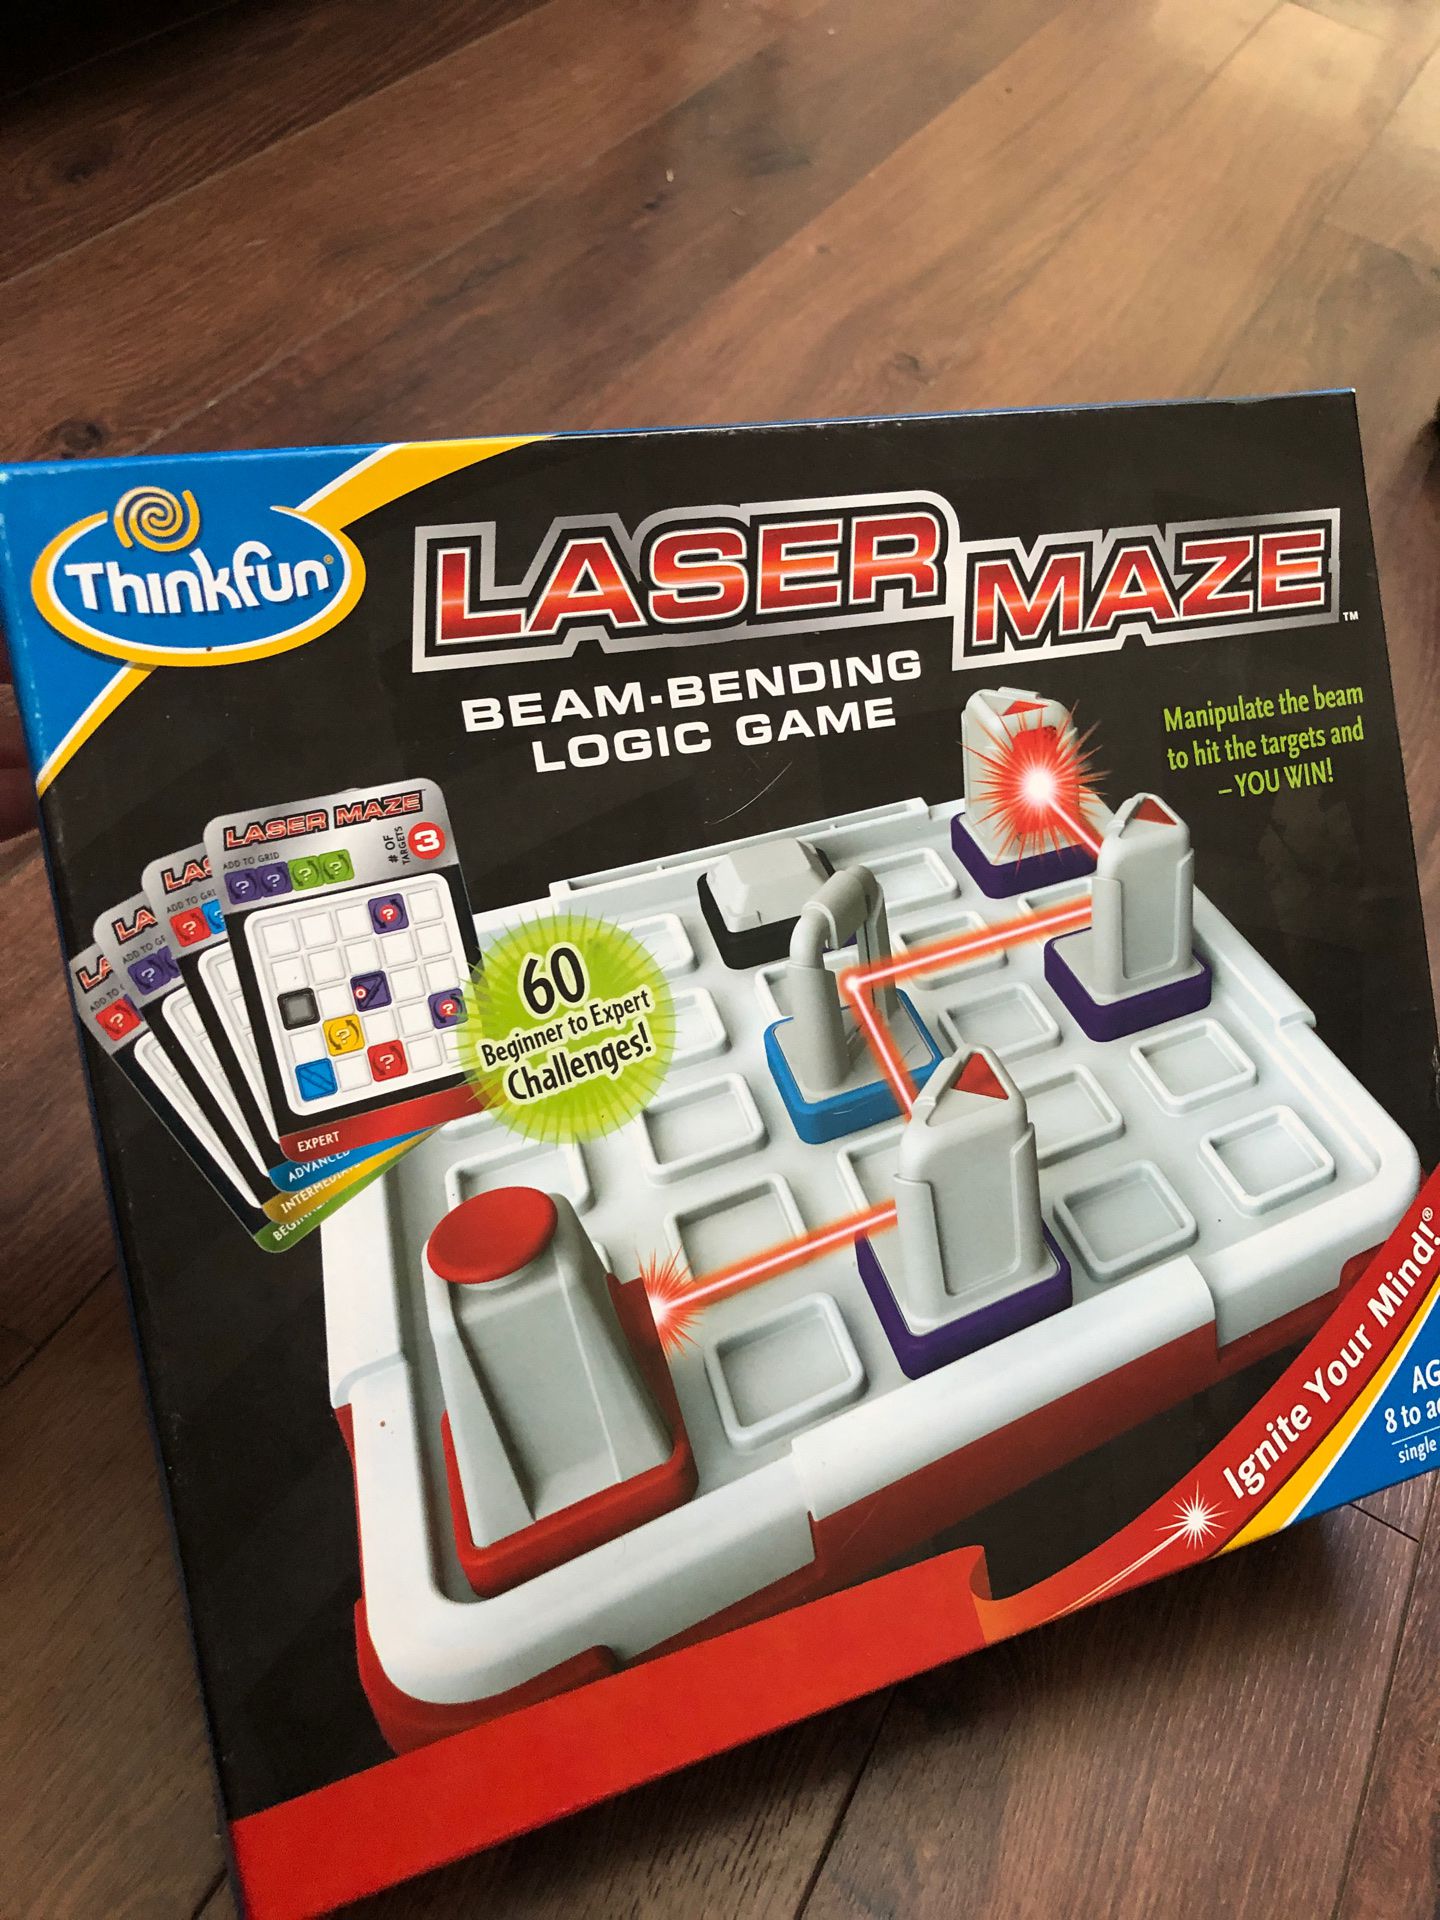 New laser maze logic game - single player - STEM, science, homeschool